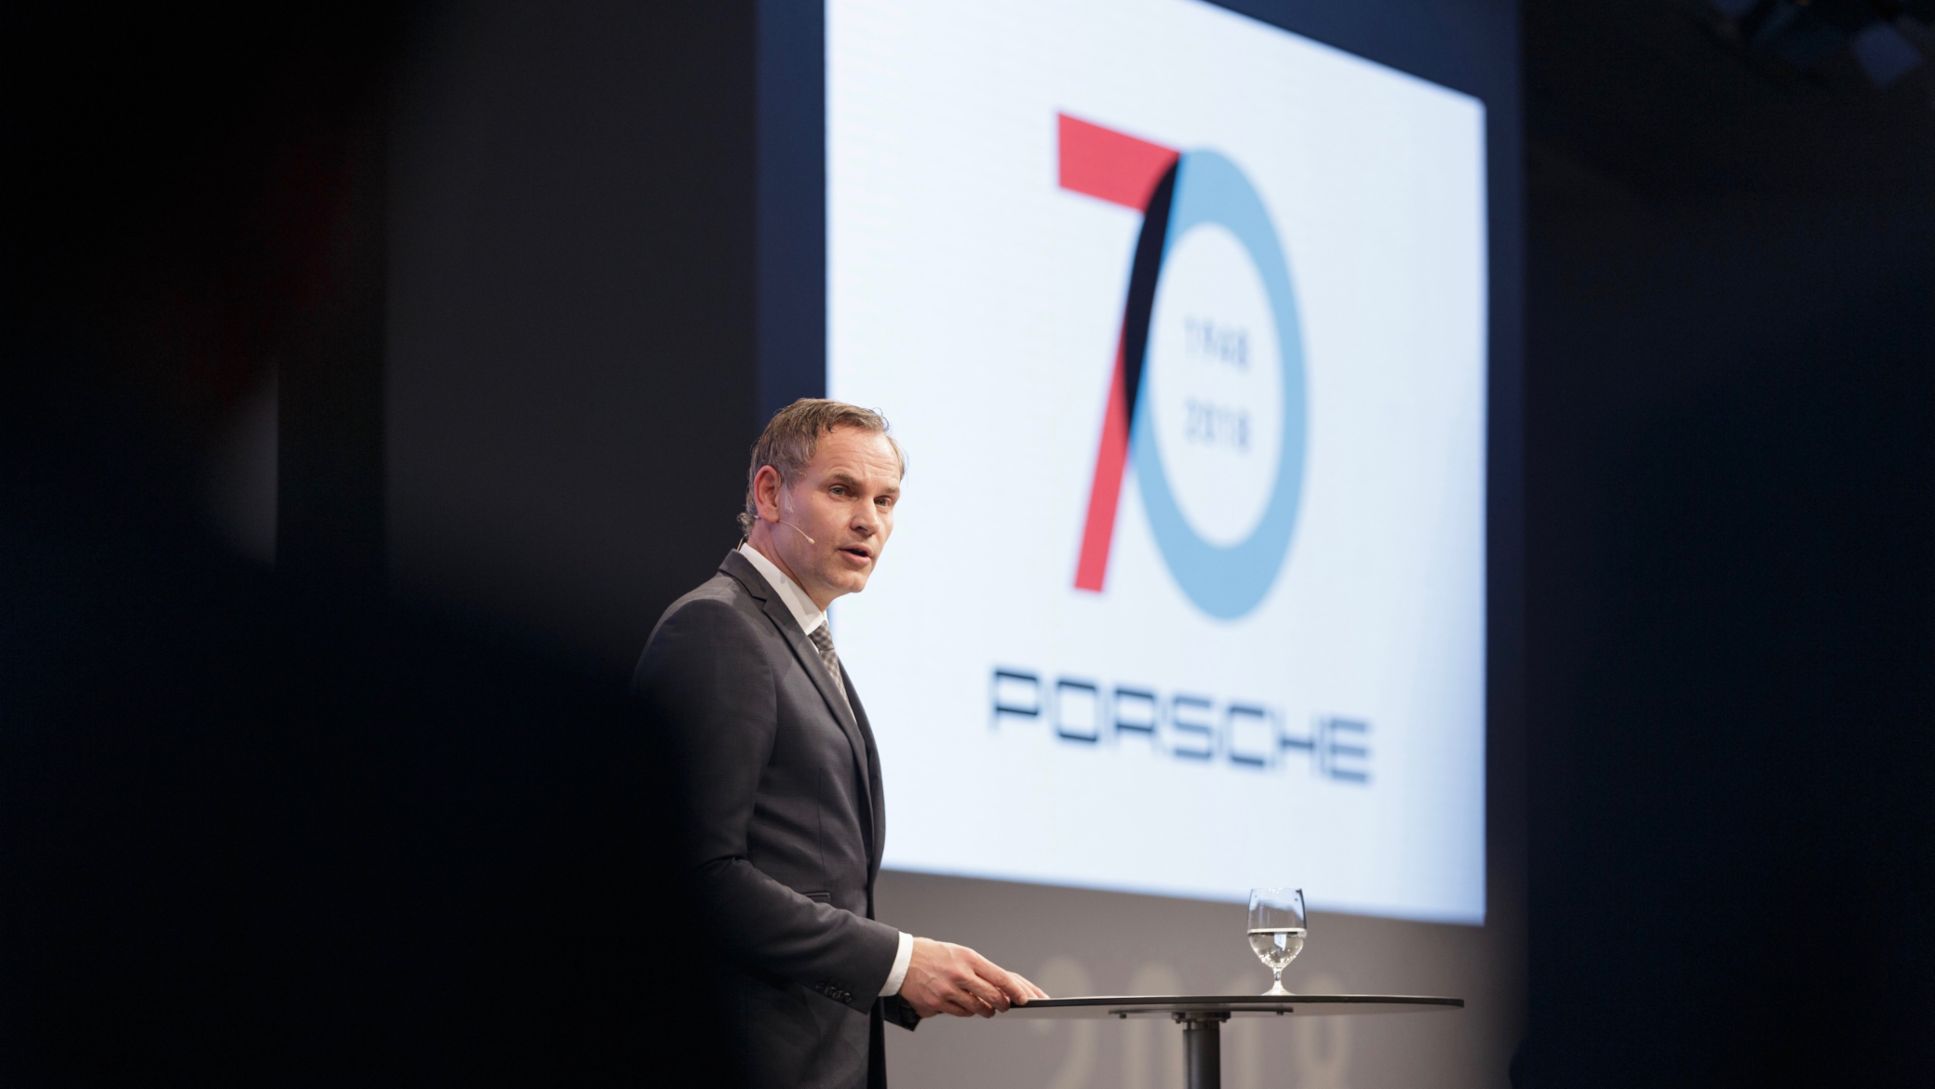 Oliver Blume, Chairman of the Executive Board at Porsche AG, New Year Reception, Porsche Museum, 2018, Porsche AG